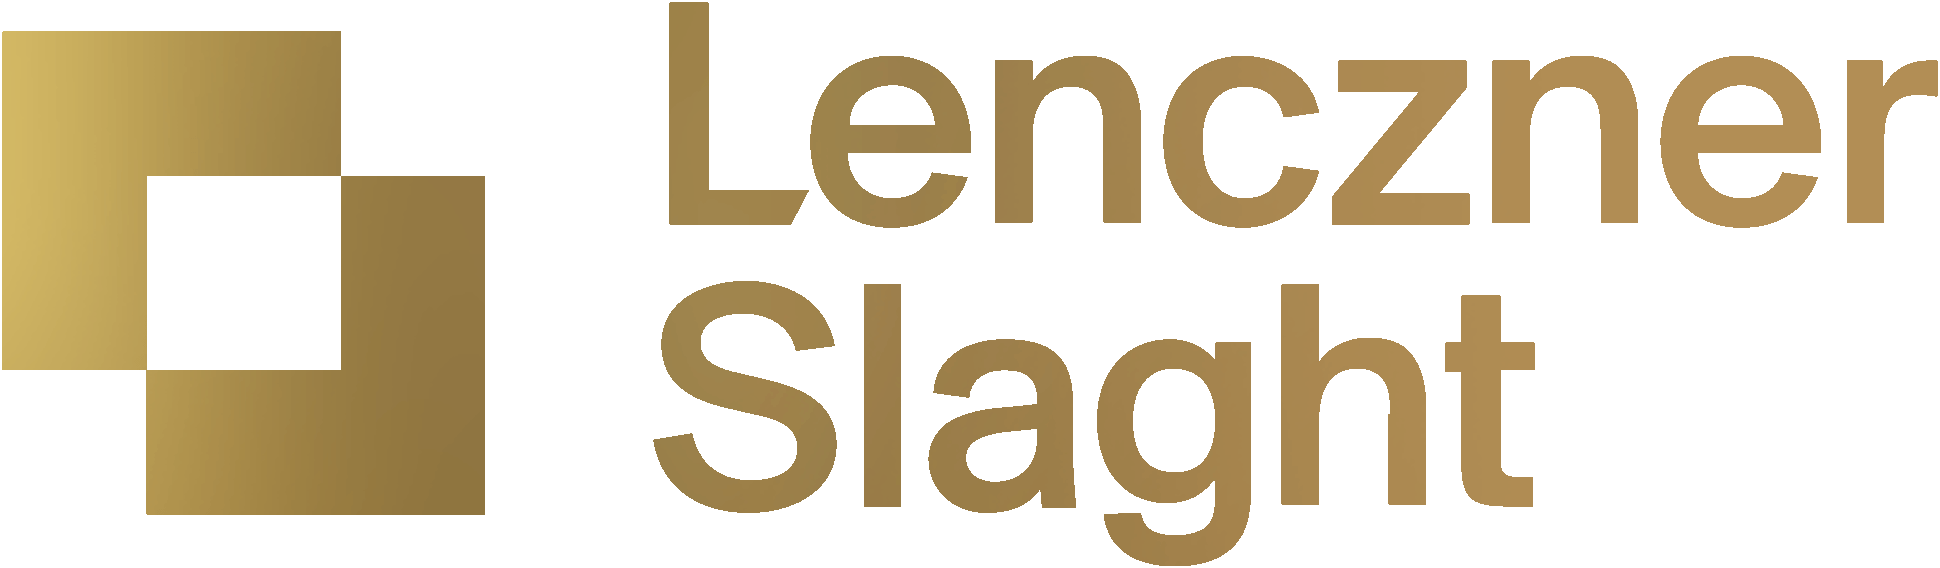 Lenczner Slaght